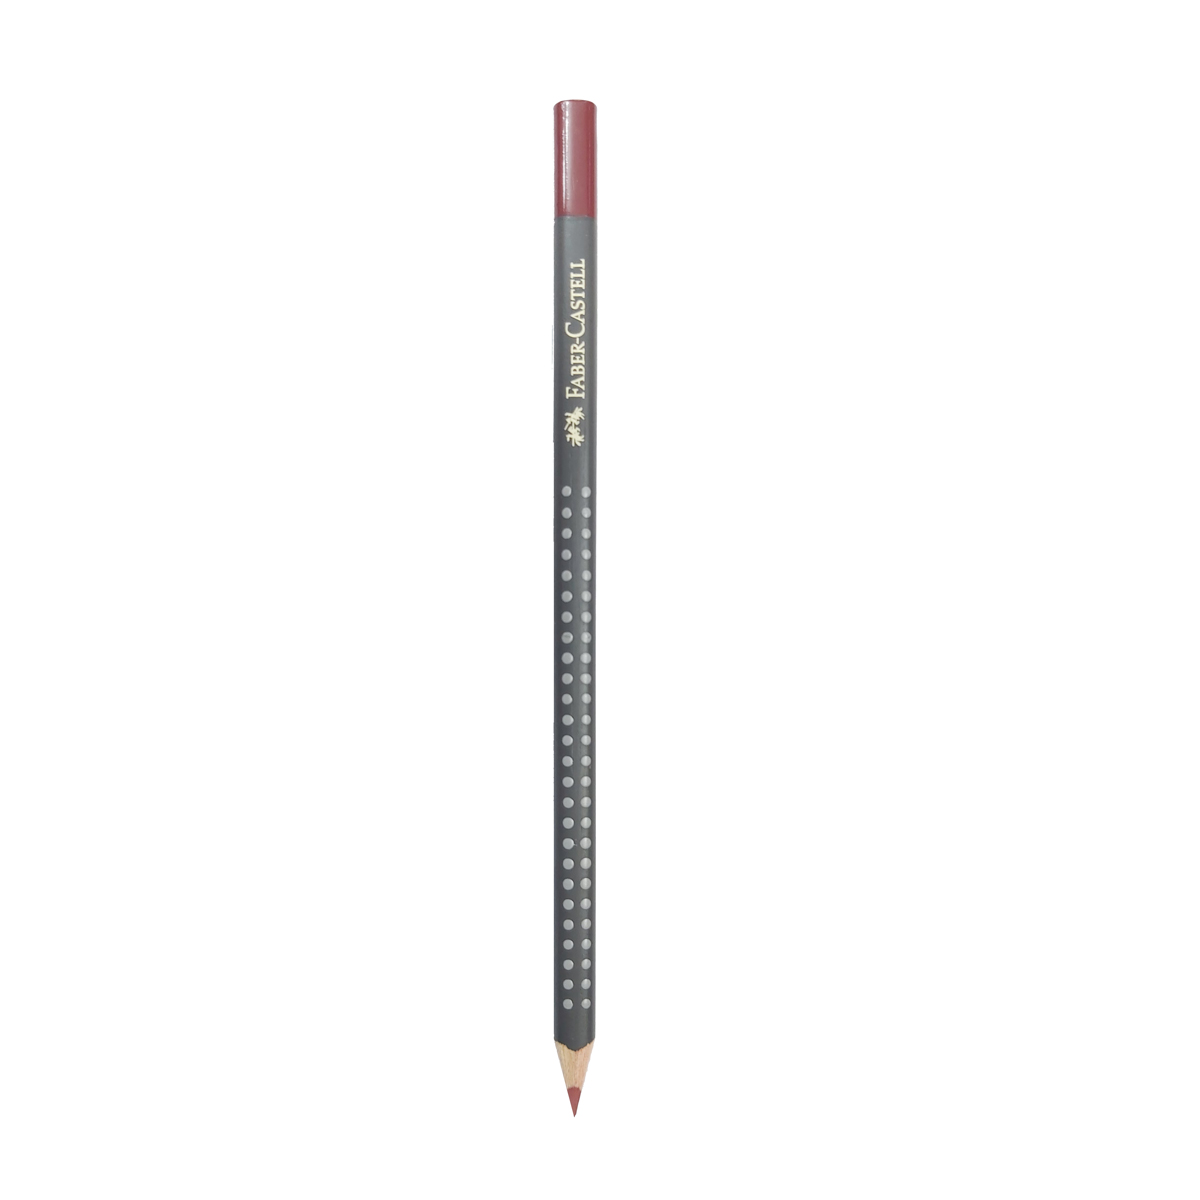  مداد رنگی فابر کاستل مدل آرت گریپ کد 192